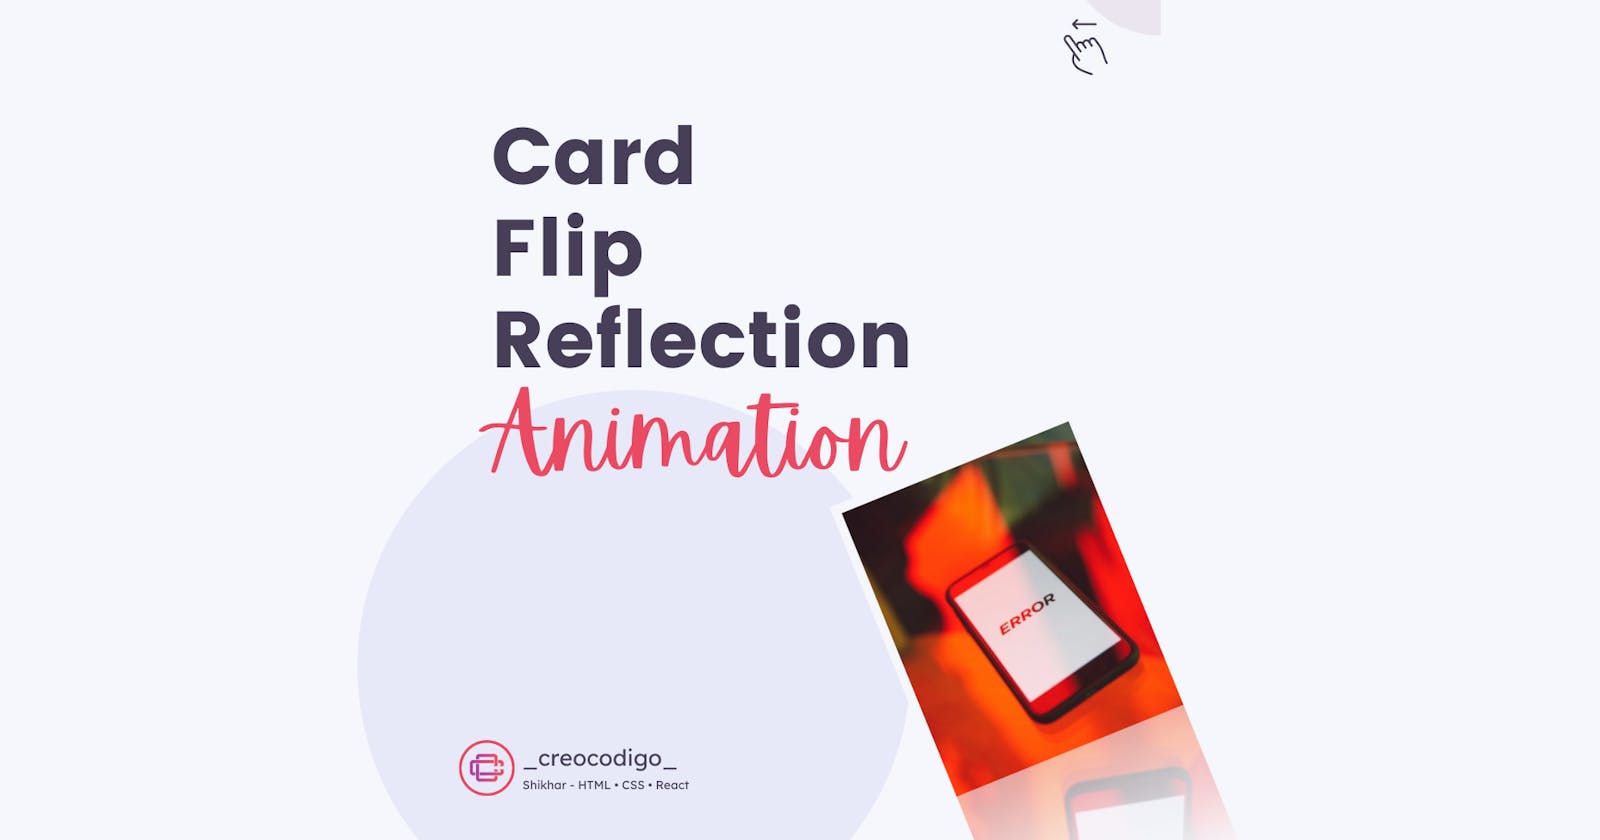 Card Flip Reflection Animation